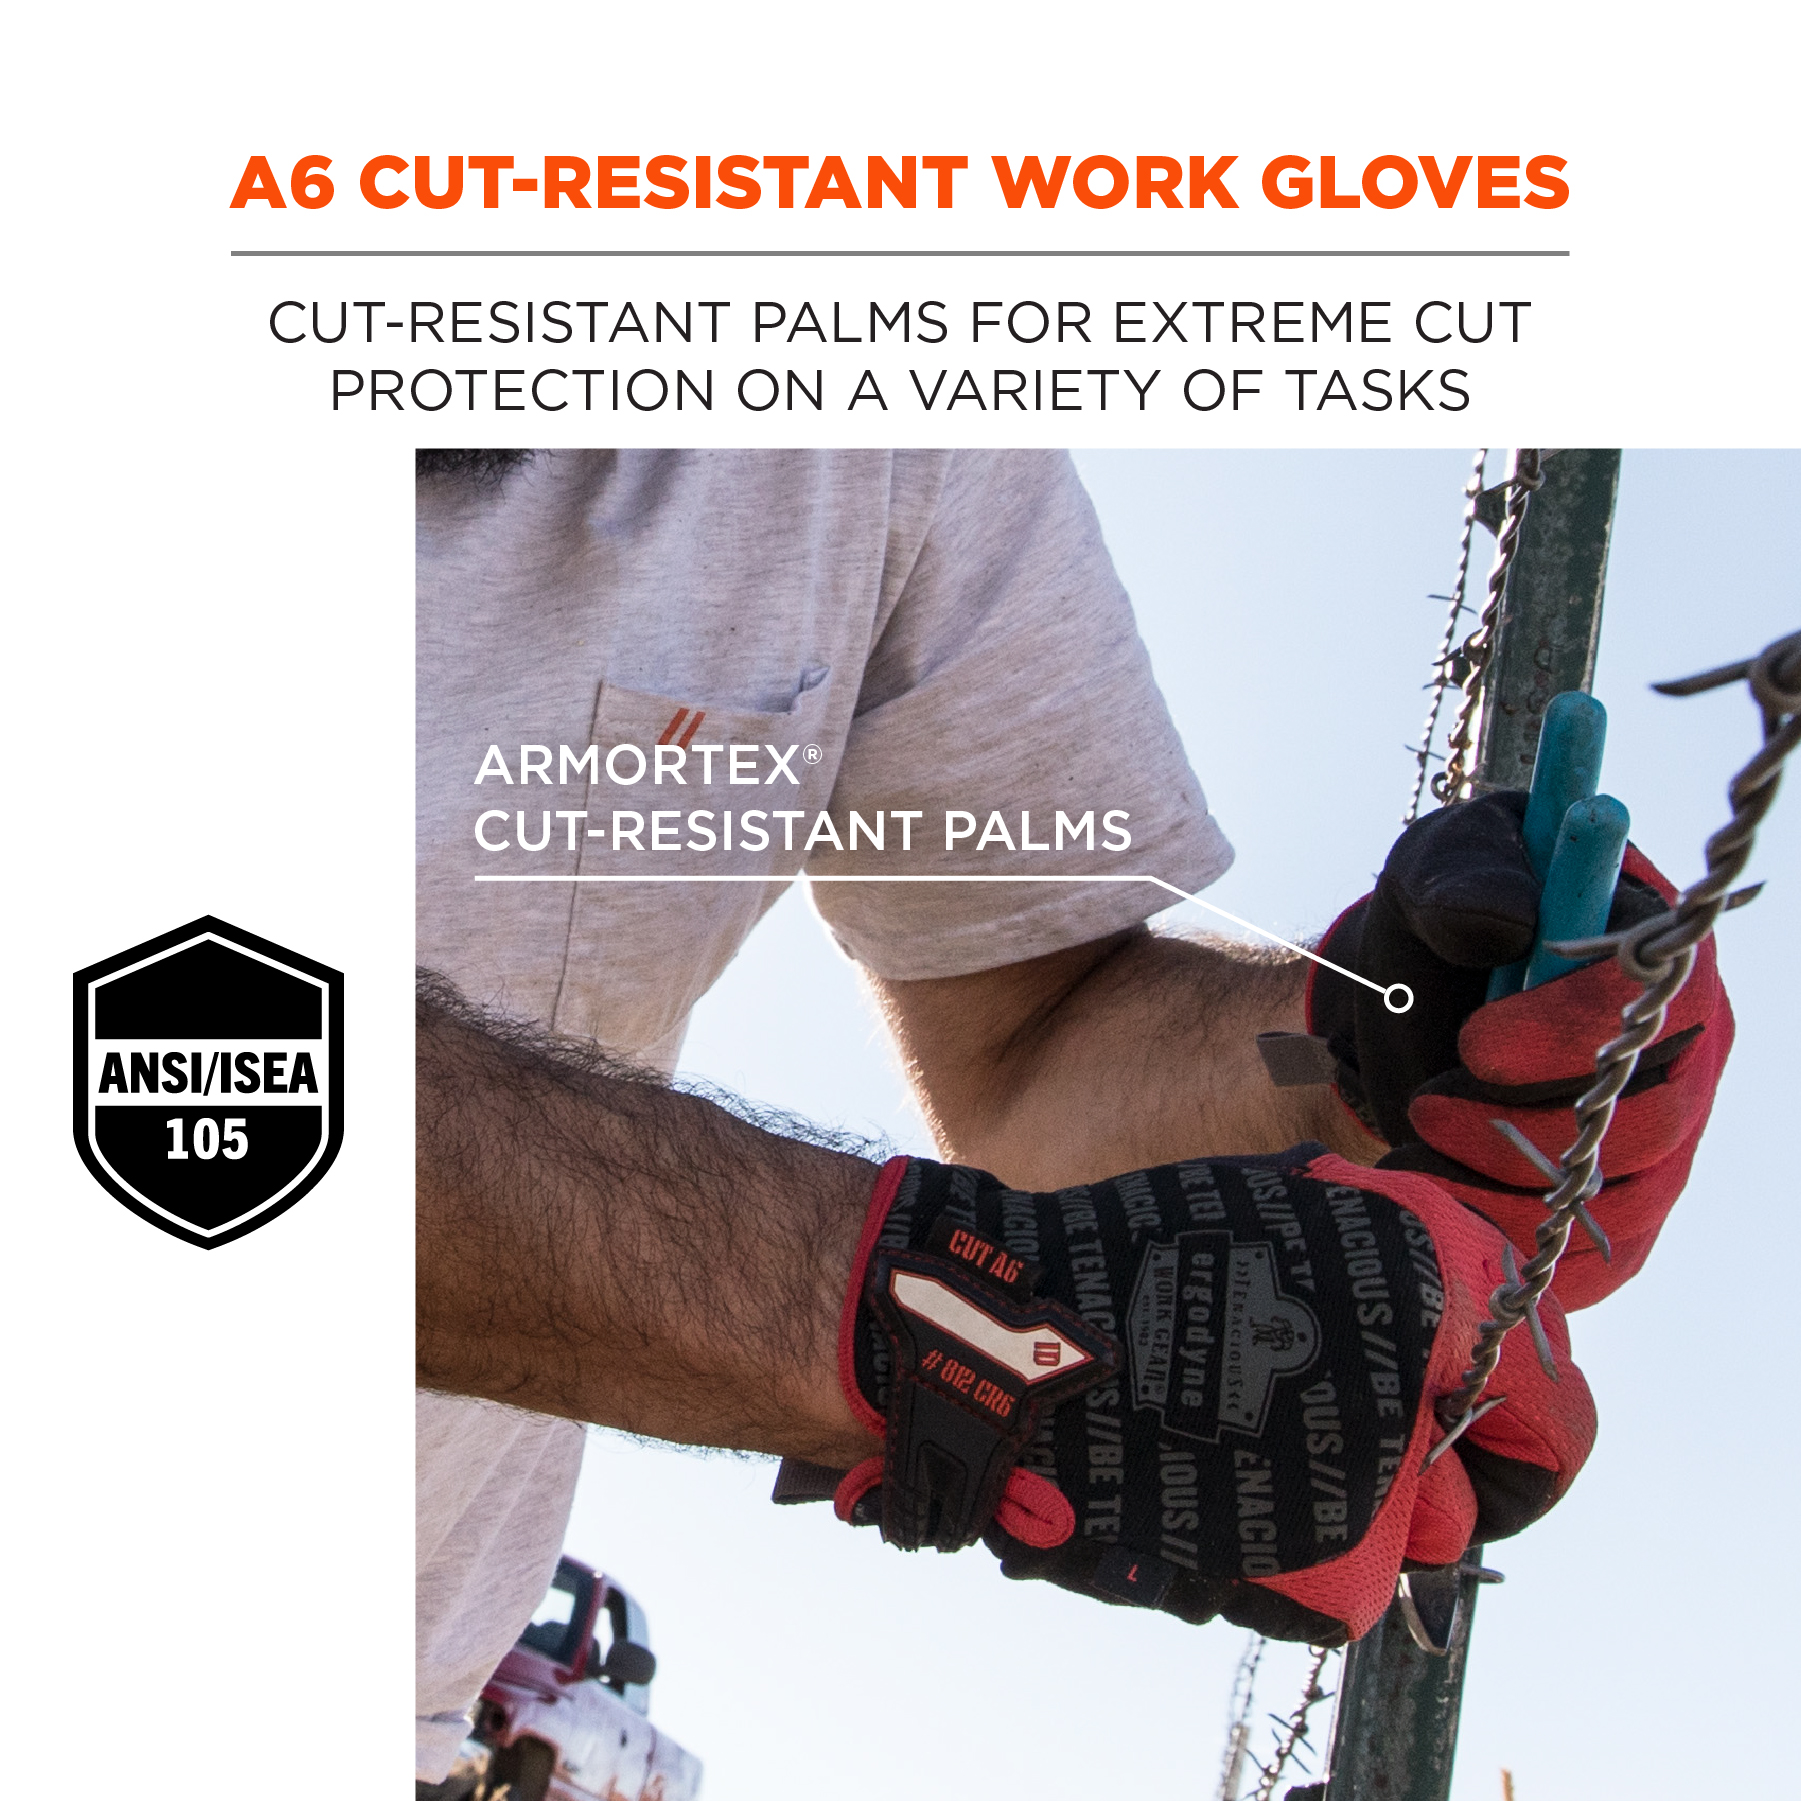 https://www.ergodyne.com/sites/default/files/product-images/17922-812cr6-utility-cut-resistance-gloves-a6-cut-resistant-work-gloves.jpg